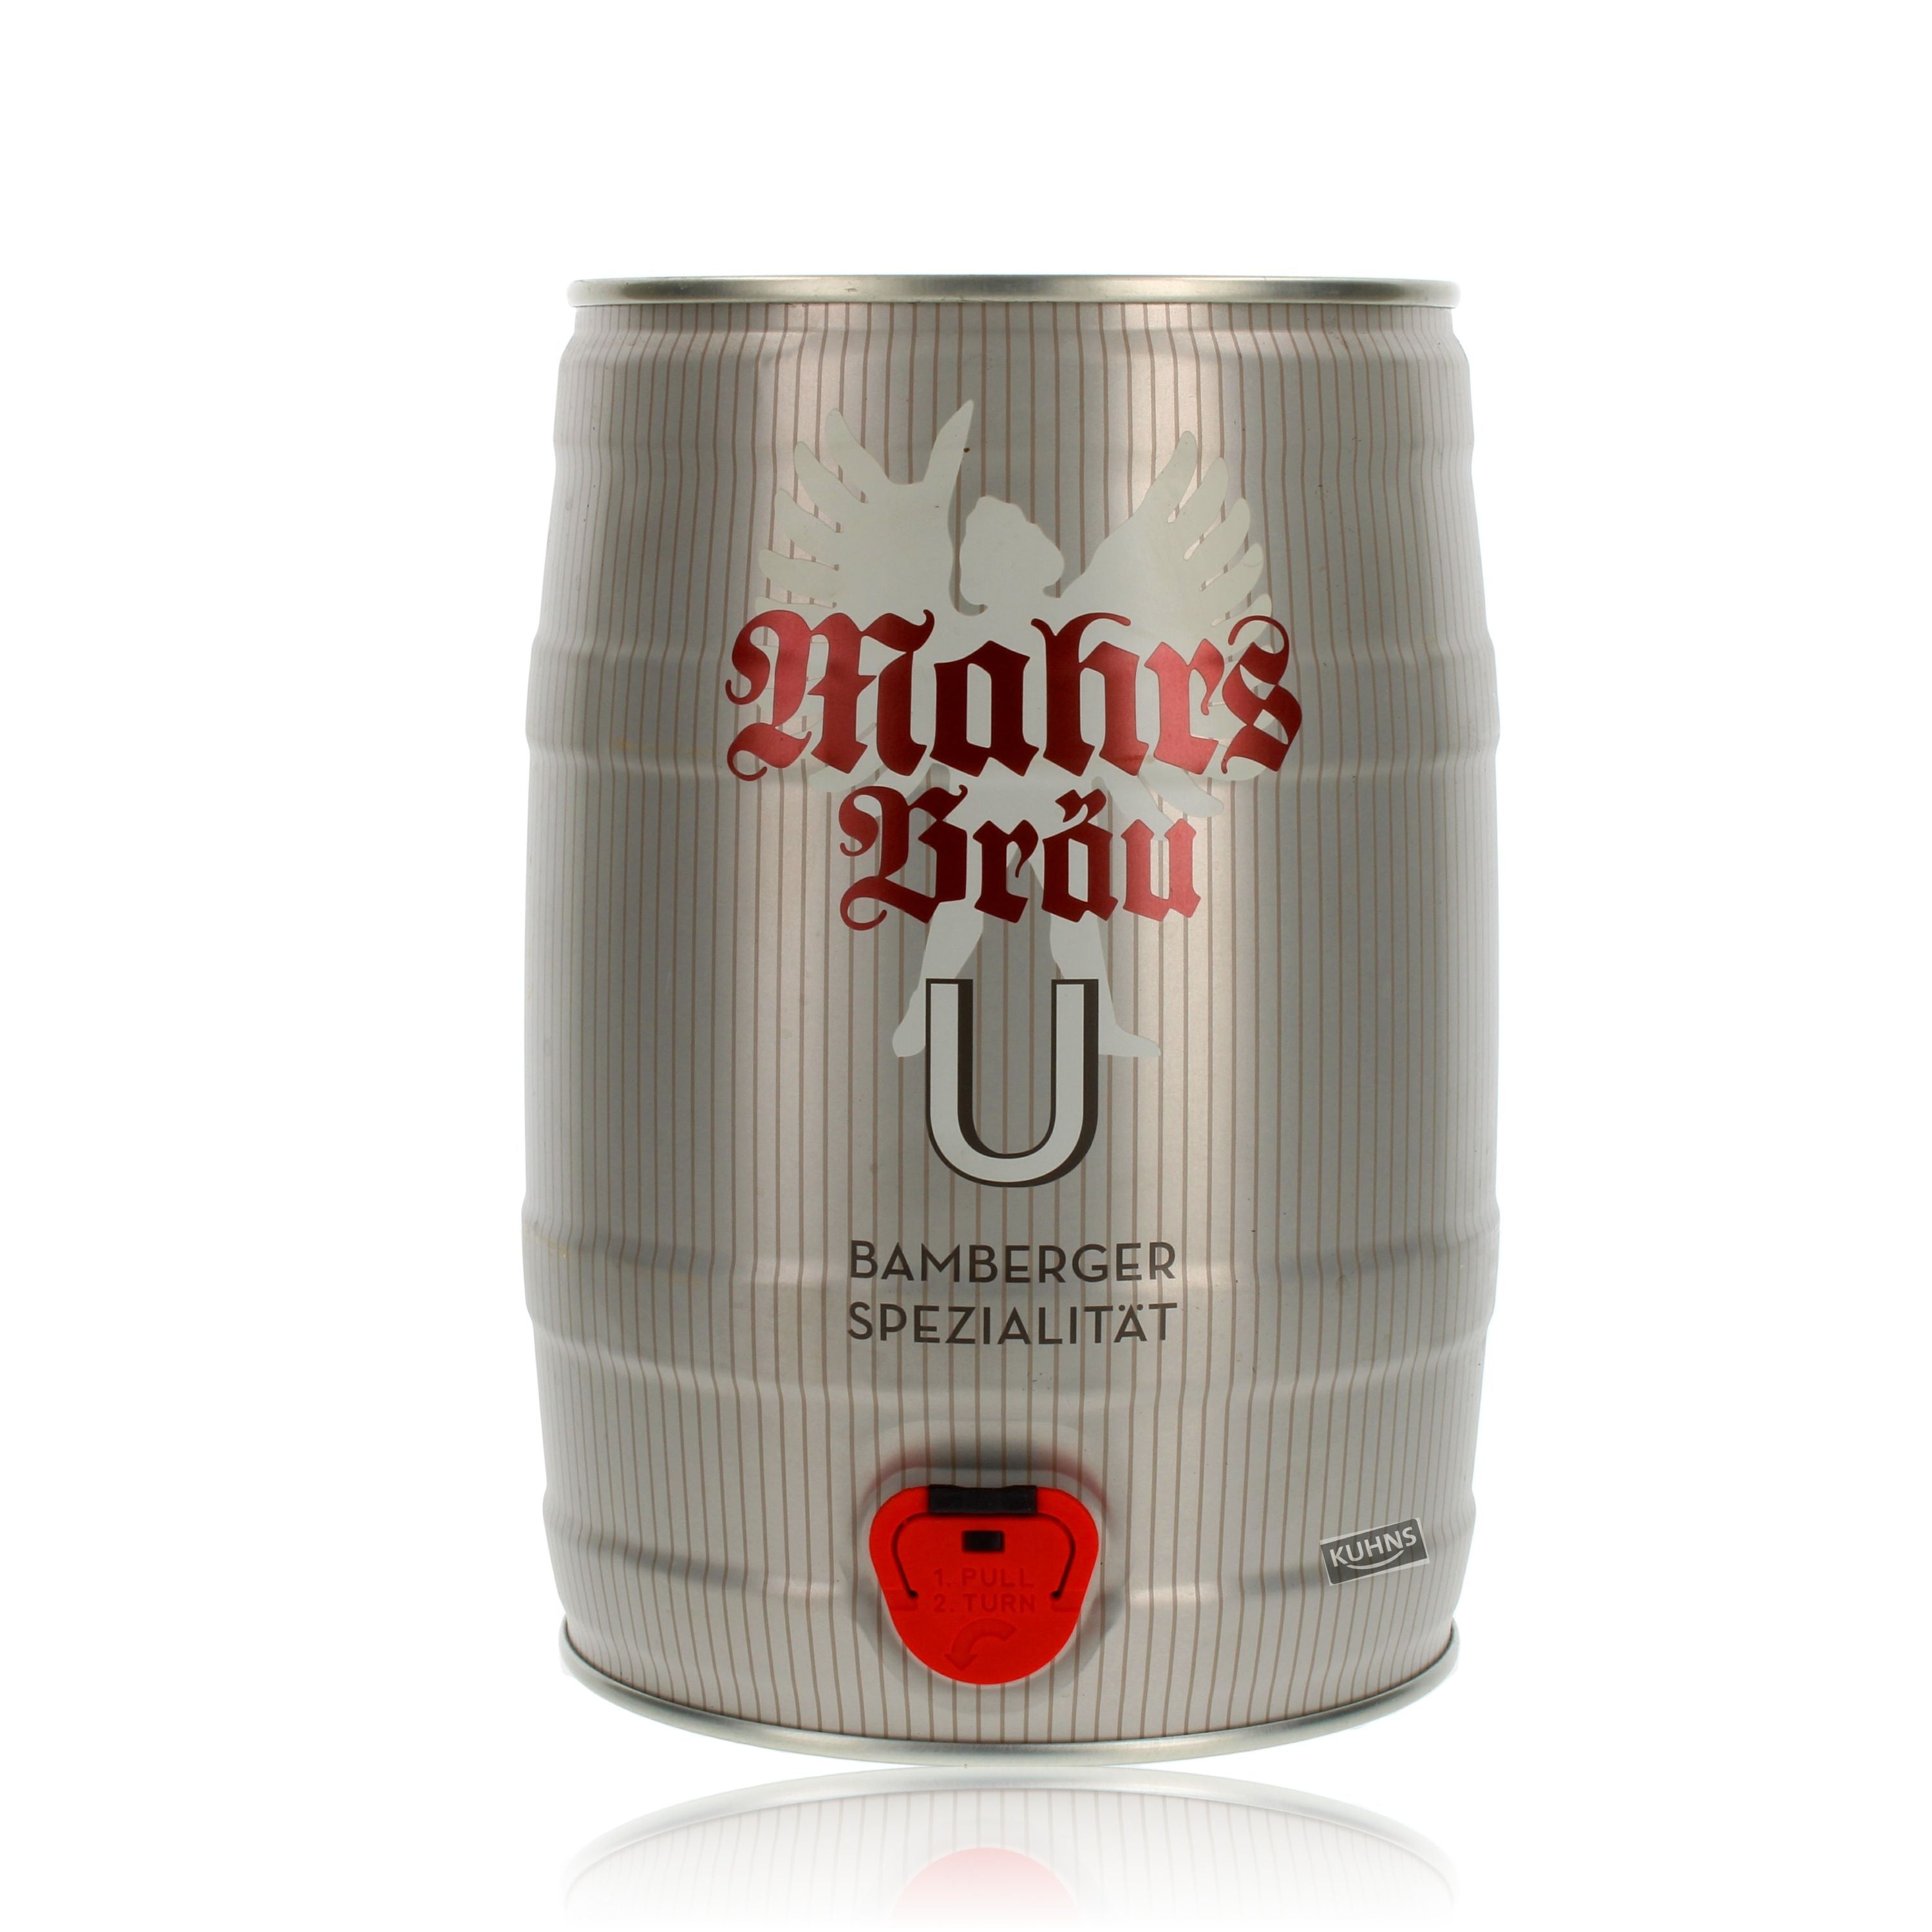 Mahrs Bräu Unspun cellar beer party keg 5.0l, alc.5.2% by volume